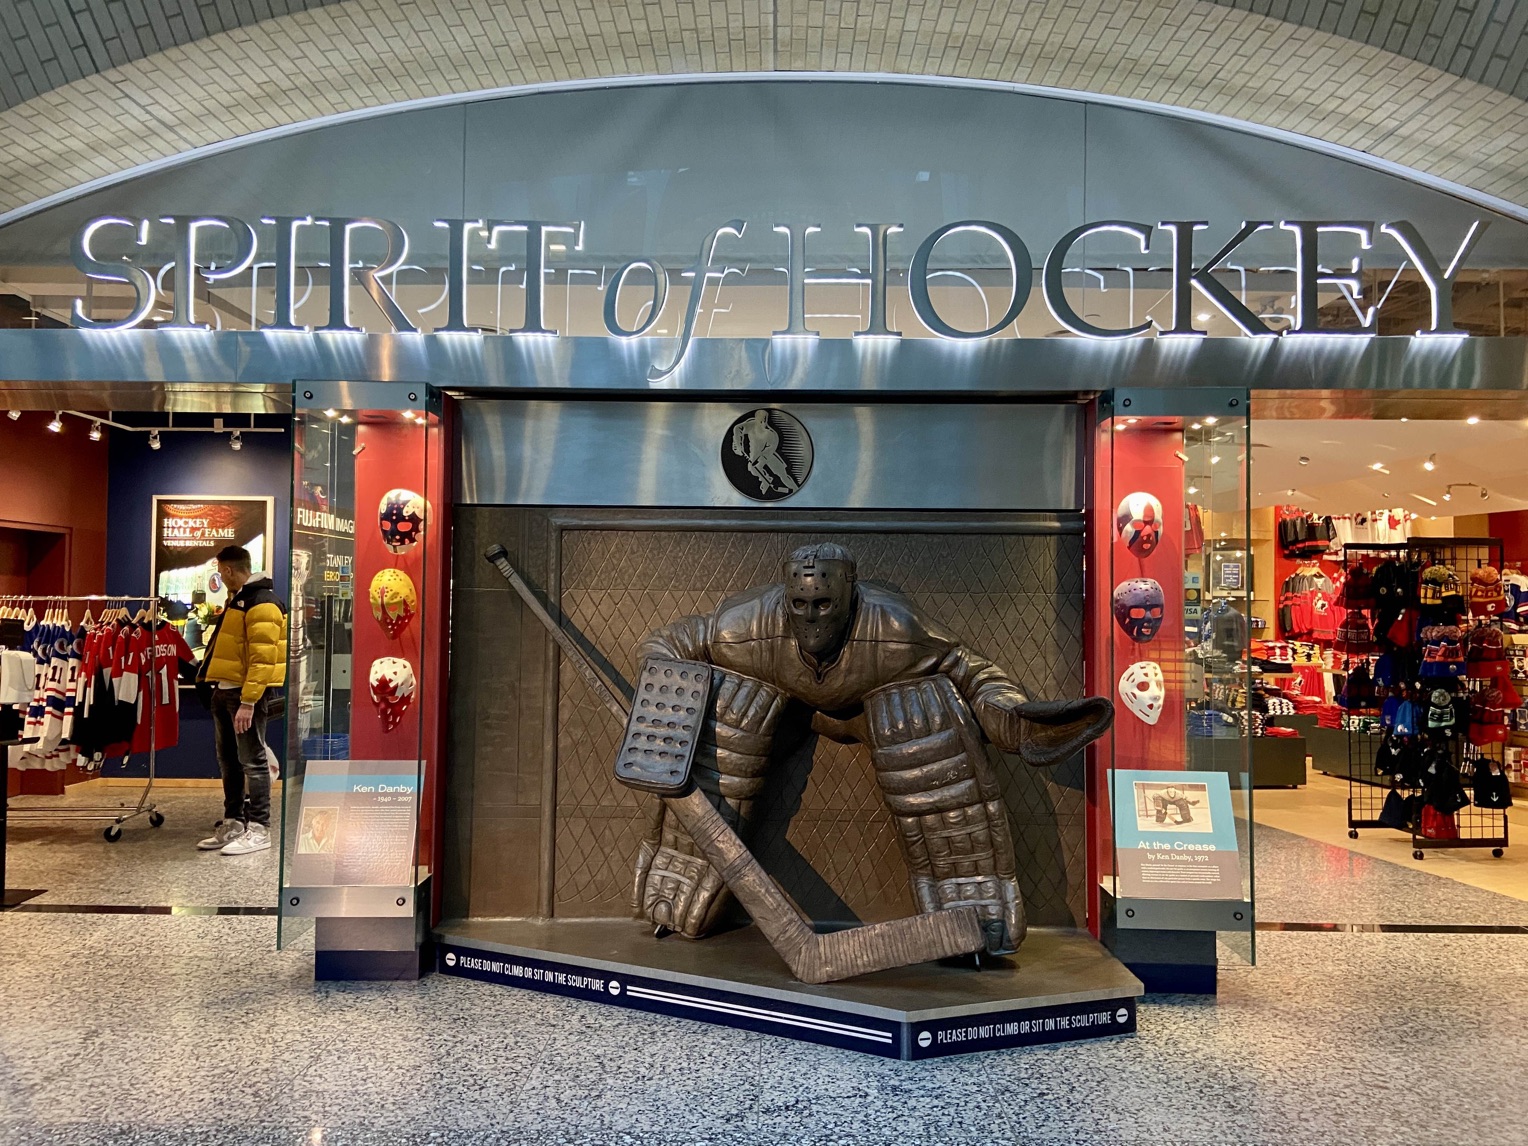 Hockey Hall of Fame - Venue - Toronto 